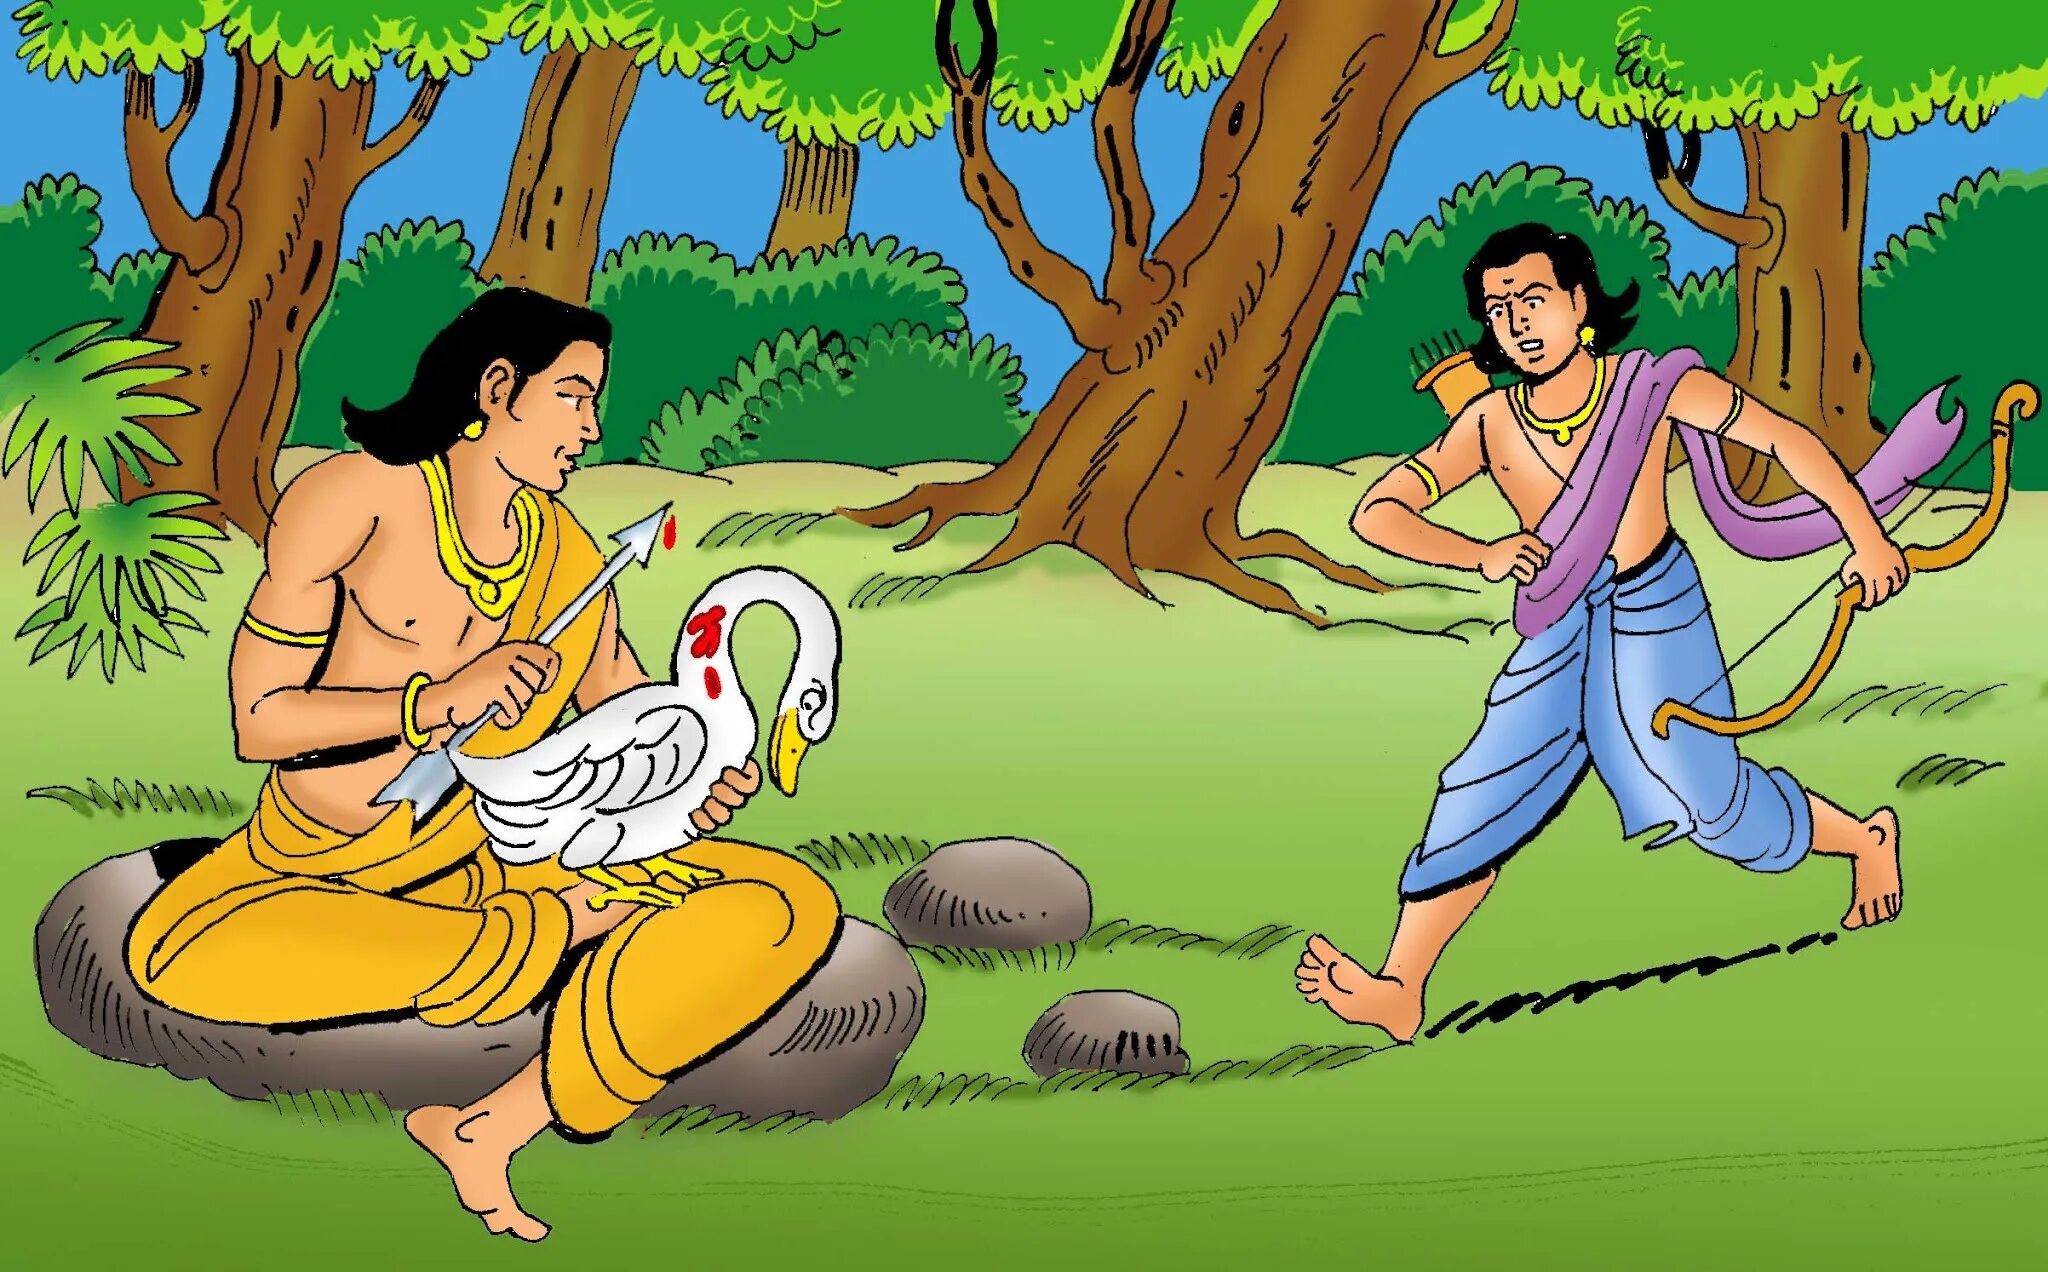 У царя племени родился сын гаутама. Сиддхартха Гаутама. Сиддхартха Гаутама Будда. Принц Сиддхартха Гаутама. Царевич Сиддхартха Гаутама.